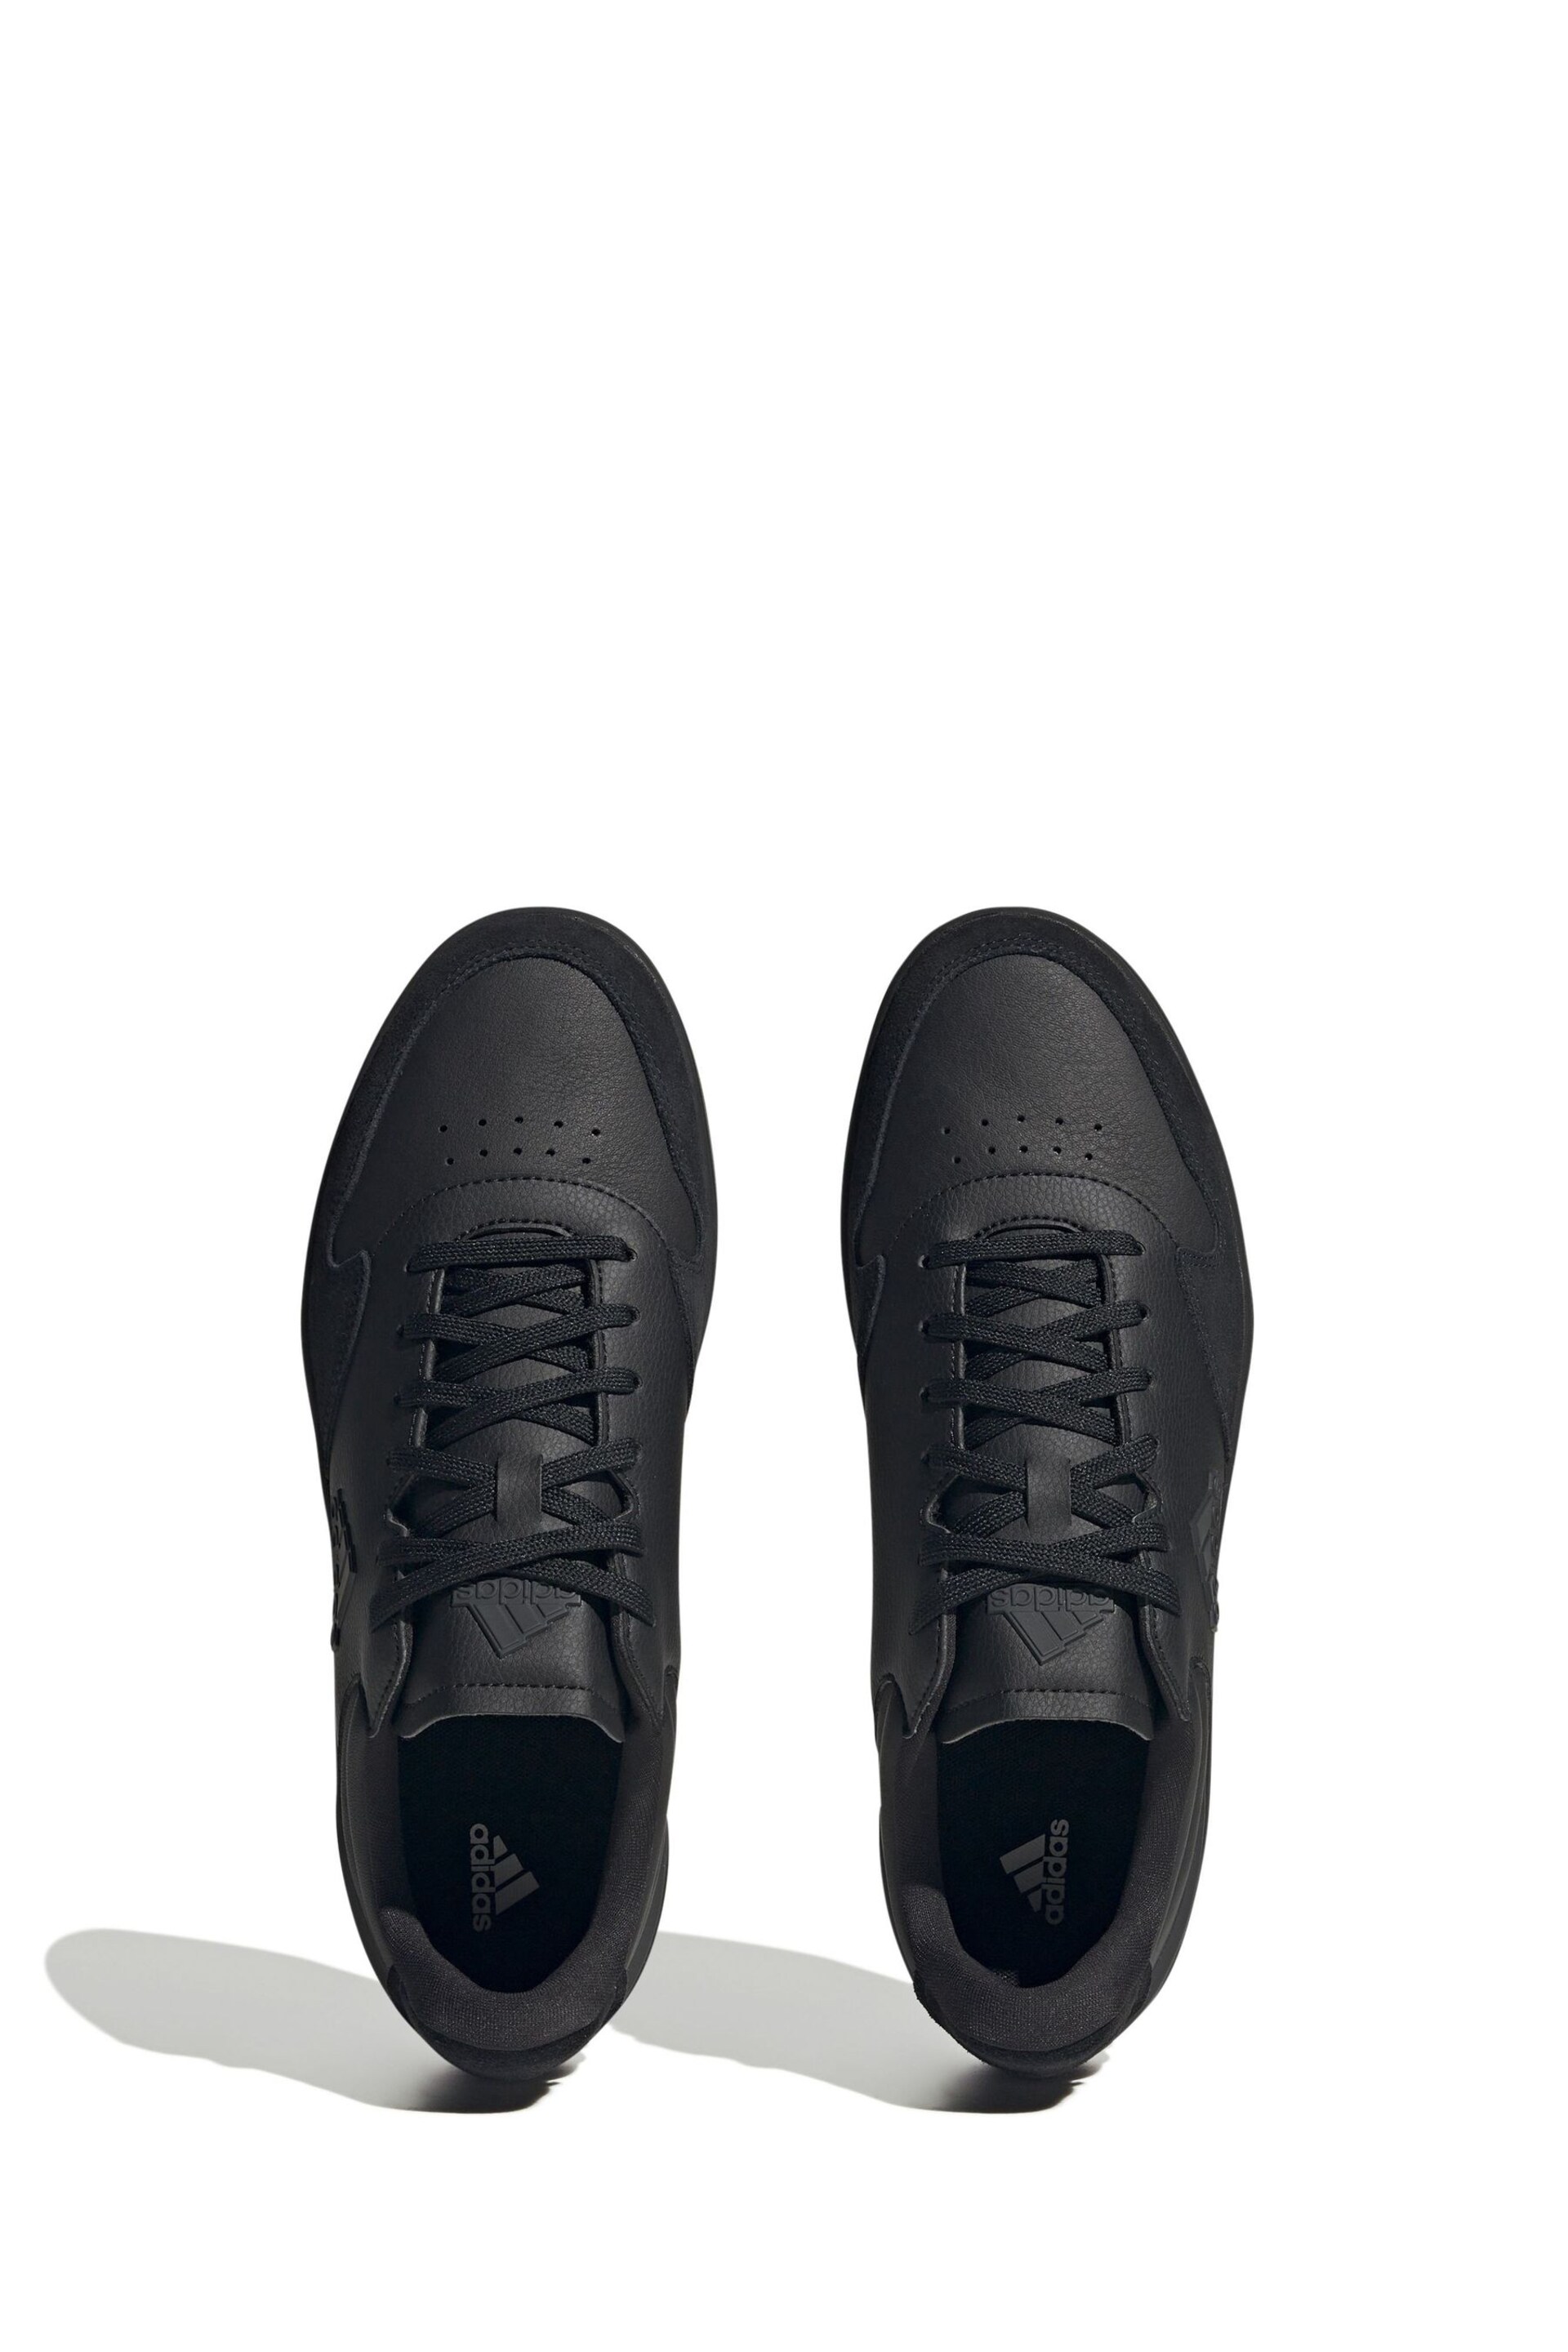 adidas Black Sportswear Kantana Trainers - Image 6 of 9